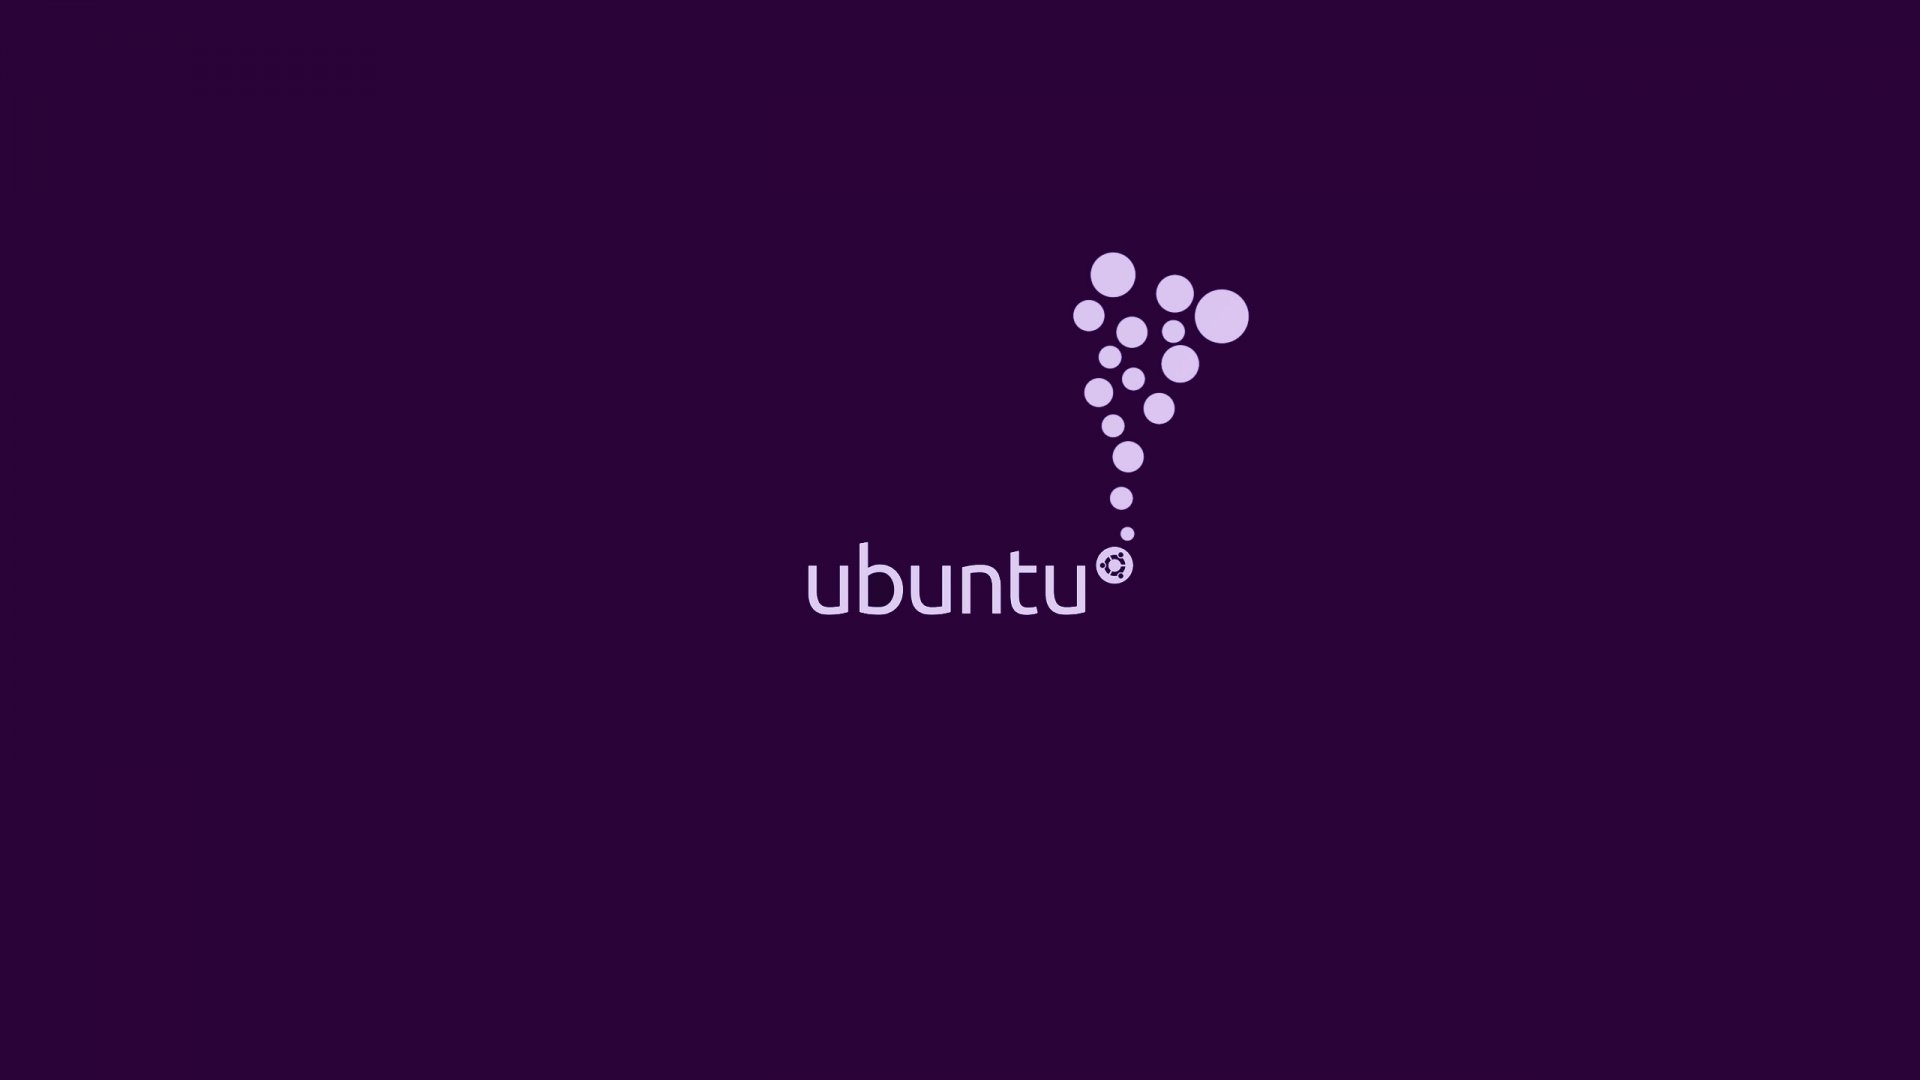 Ubuntu 1366x768 wallpapers HD   396971 1920x1080